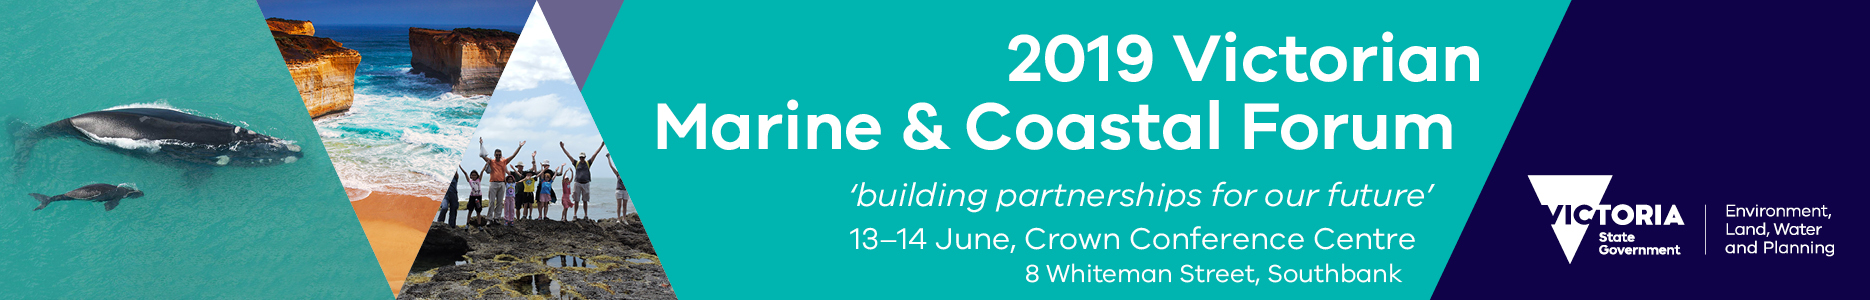 2019 Victorian Marine & Coastal Forum - building partnerships for our future.  13-14 June, Melbourne.